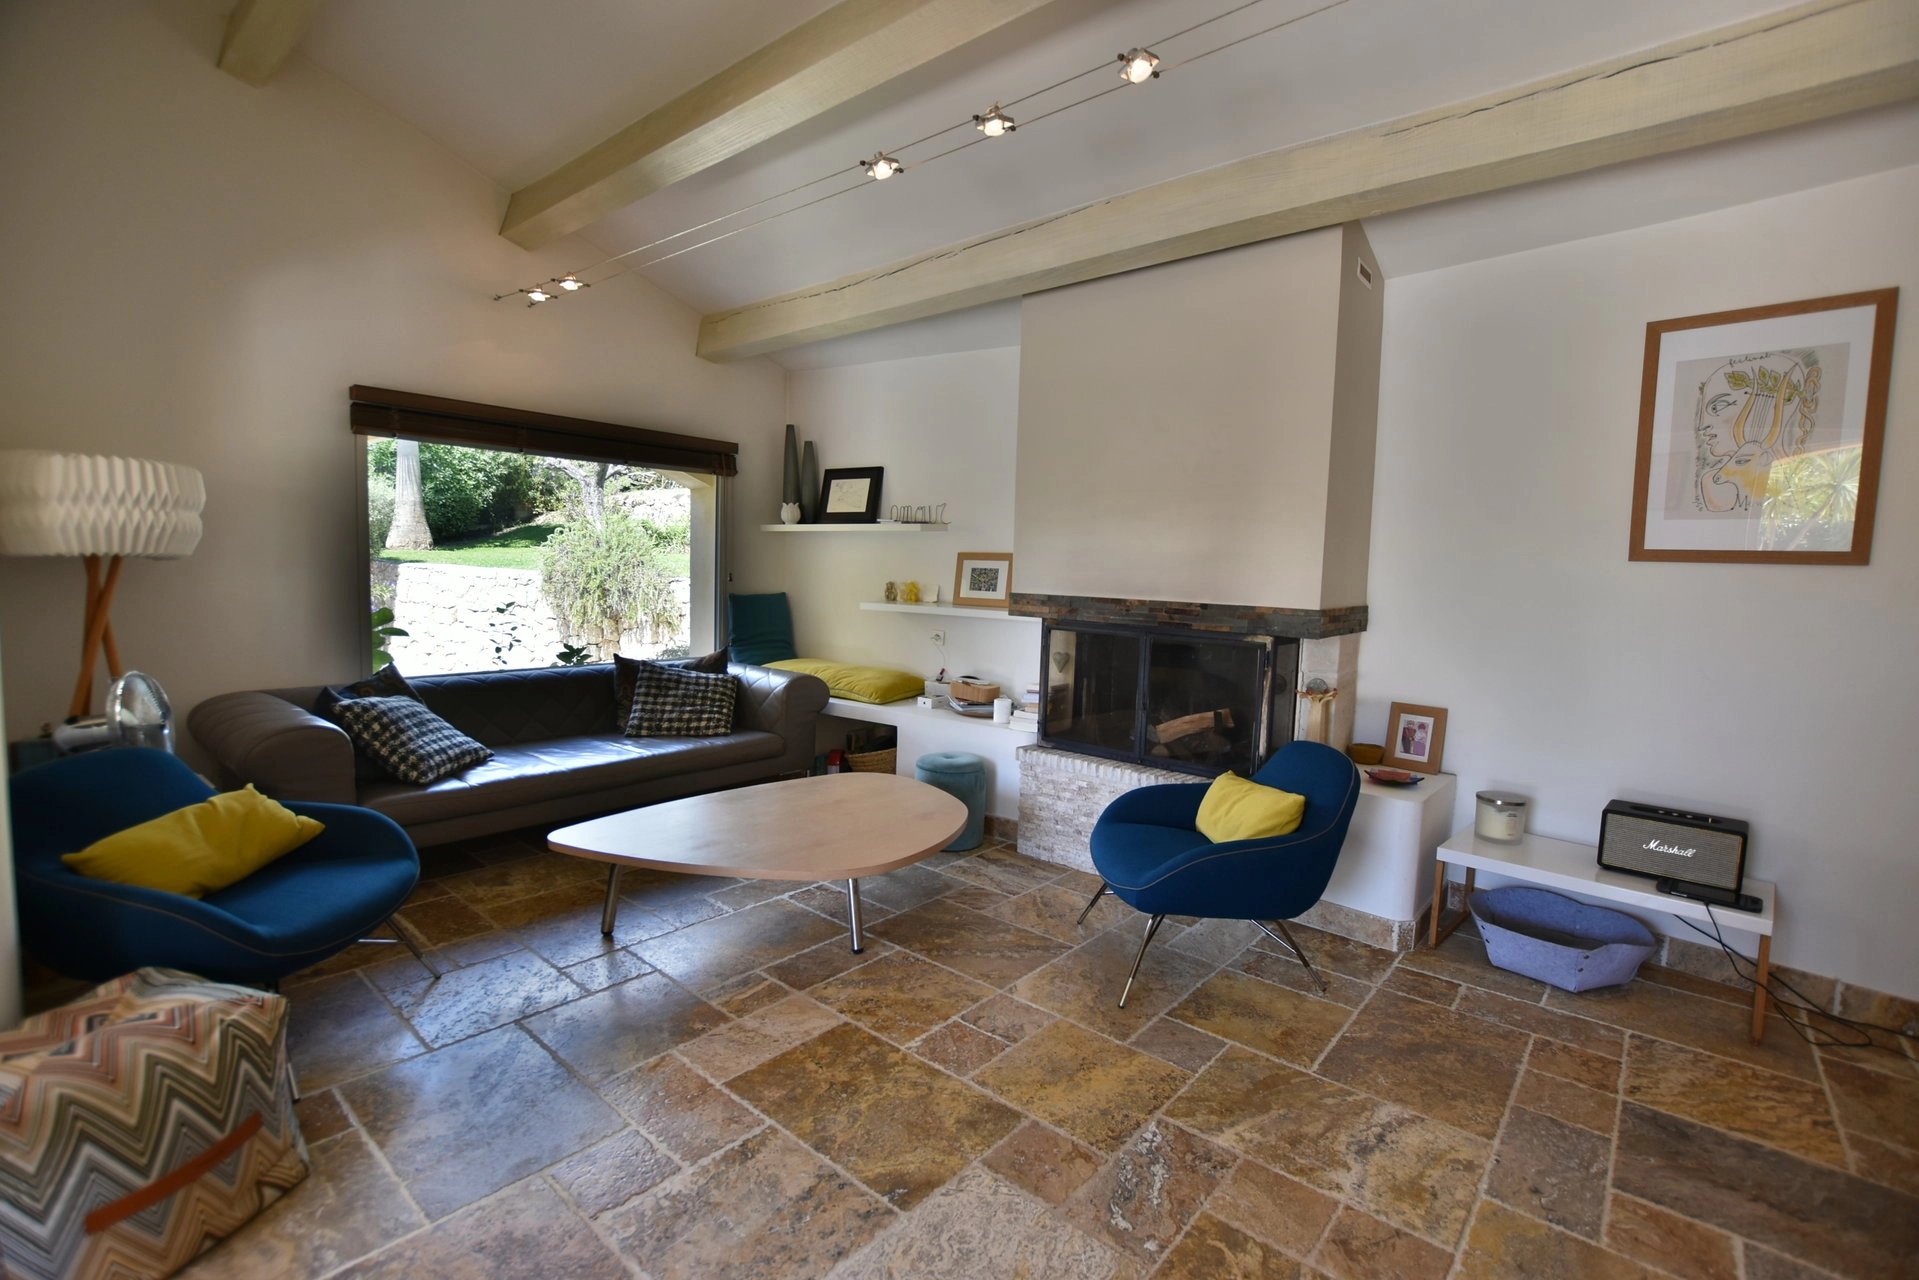 Living-room Tile Fireplace